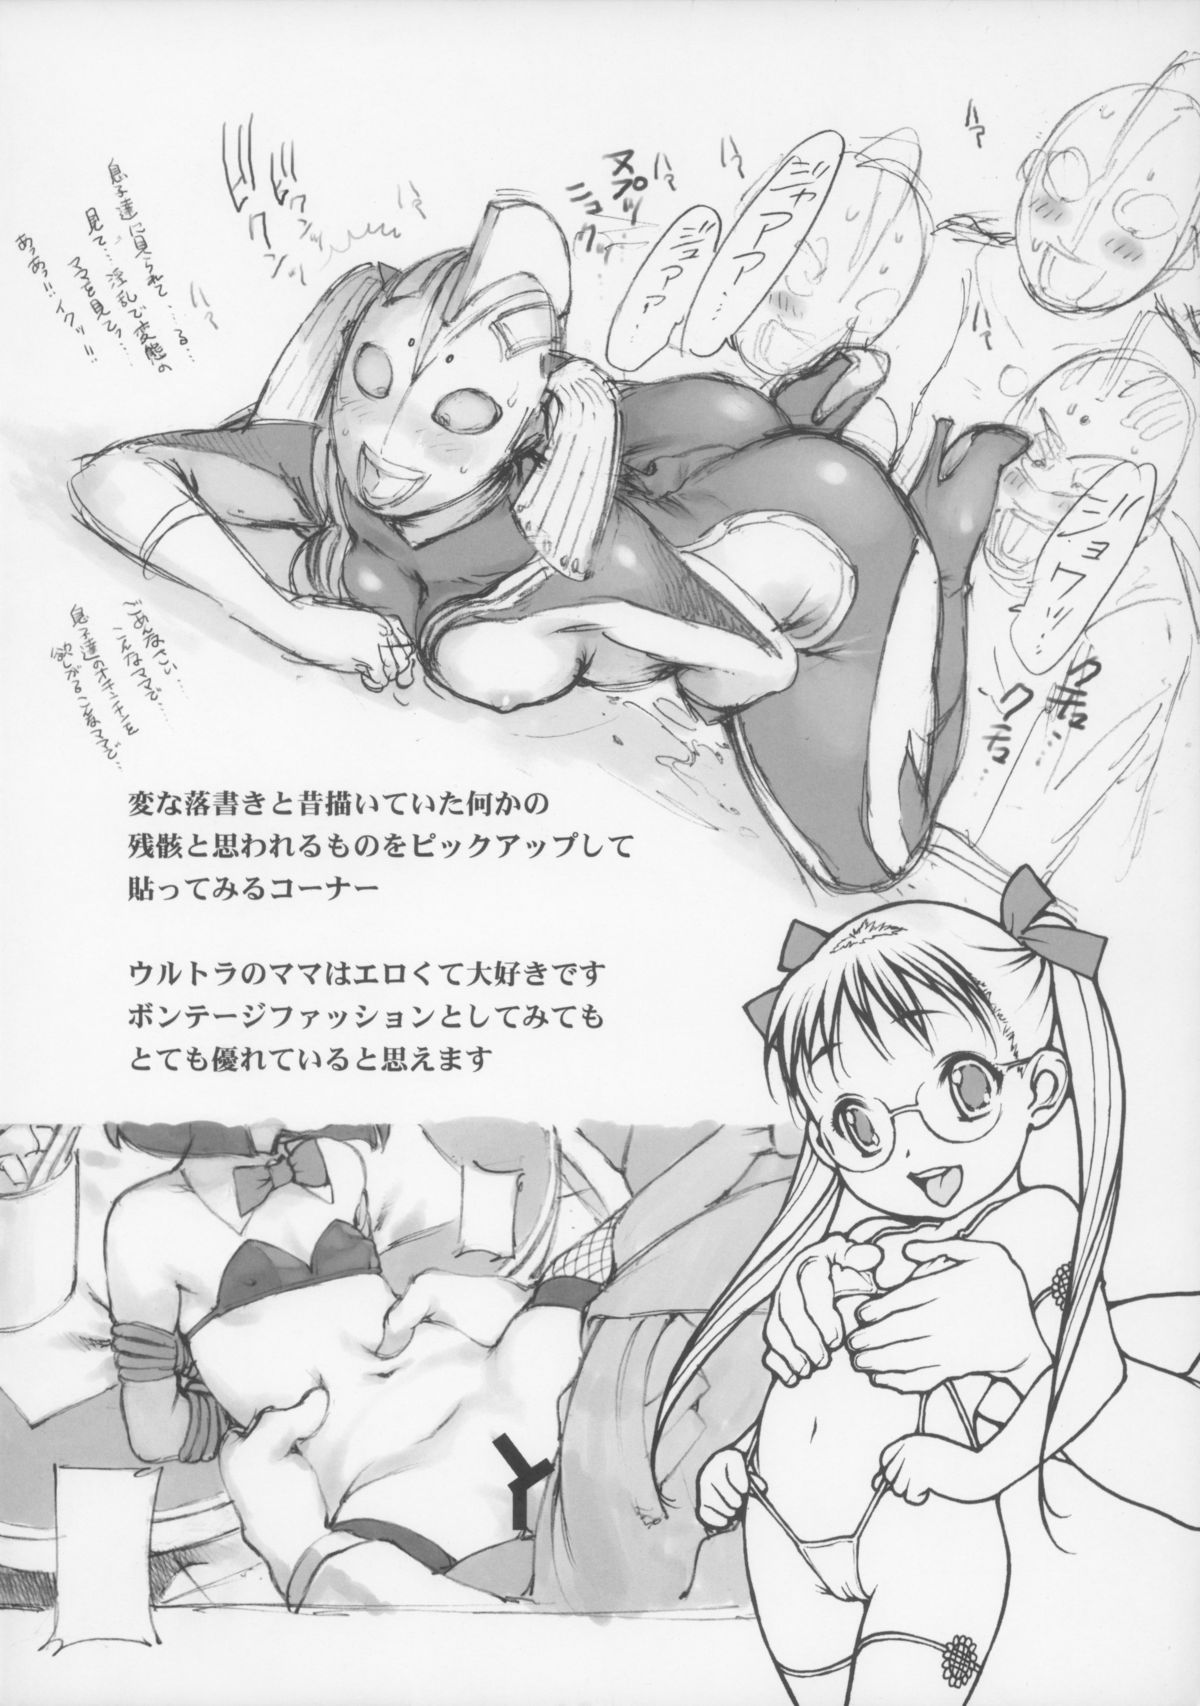 Read C Dasshifunnyuu Nishi Iori Houkago Shoujo Various Hentai Porns Manga And